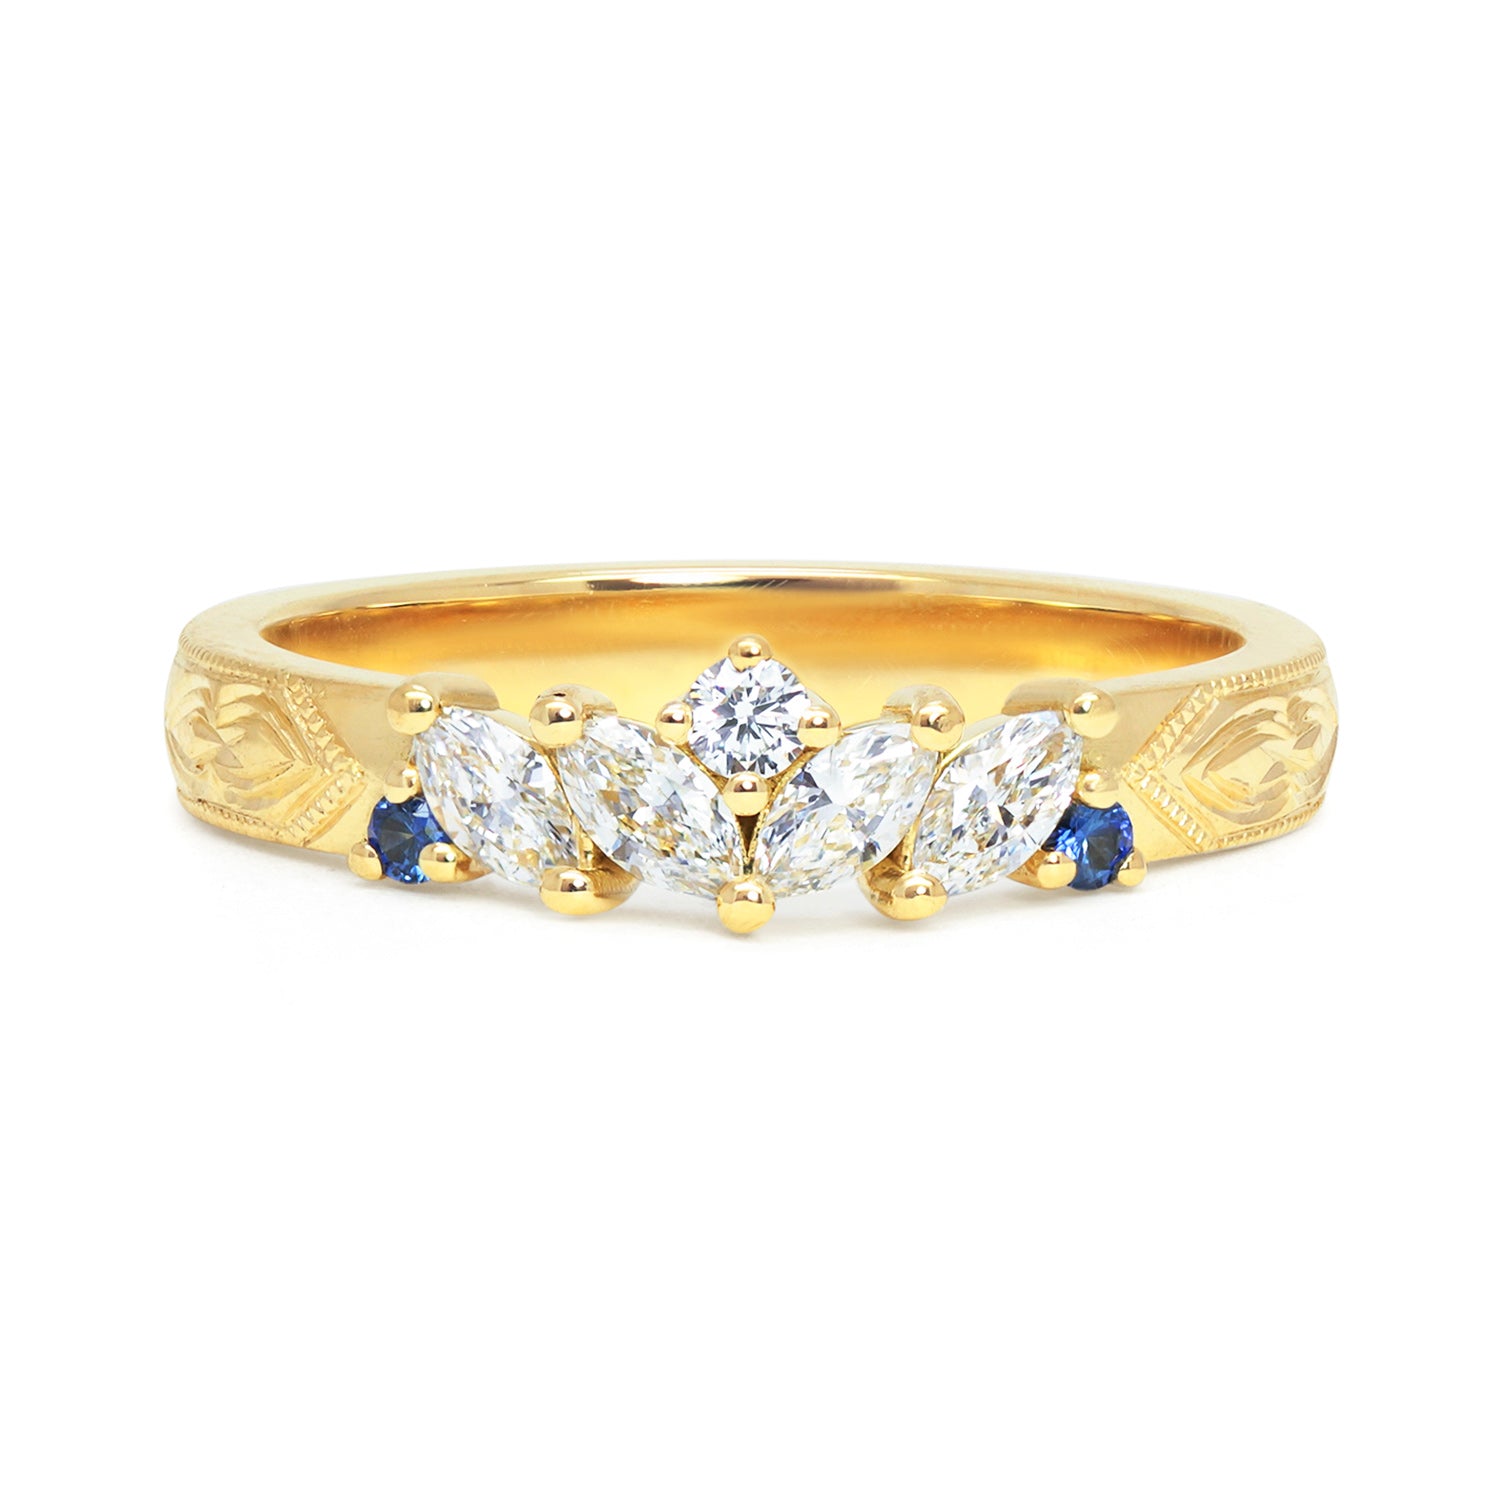 Bespoke Louise Ethical Diamond & Sapphire Wedding Ring